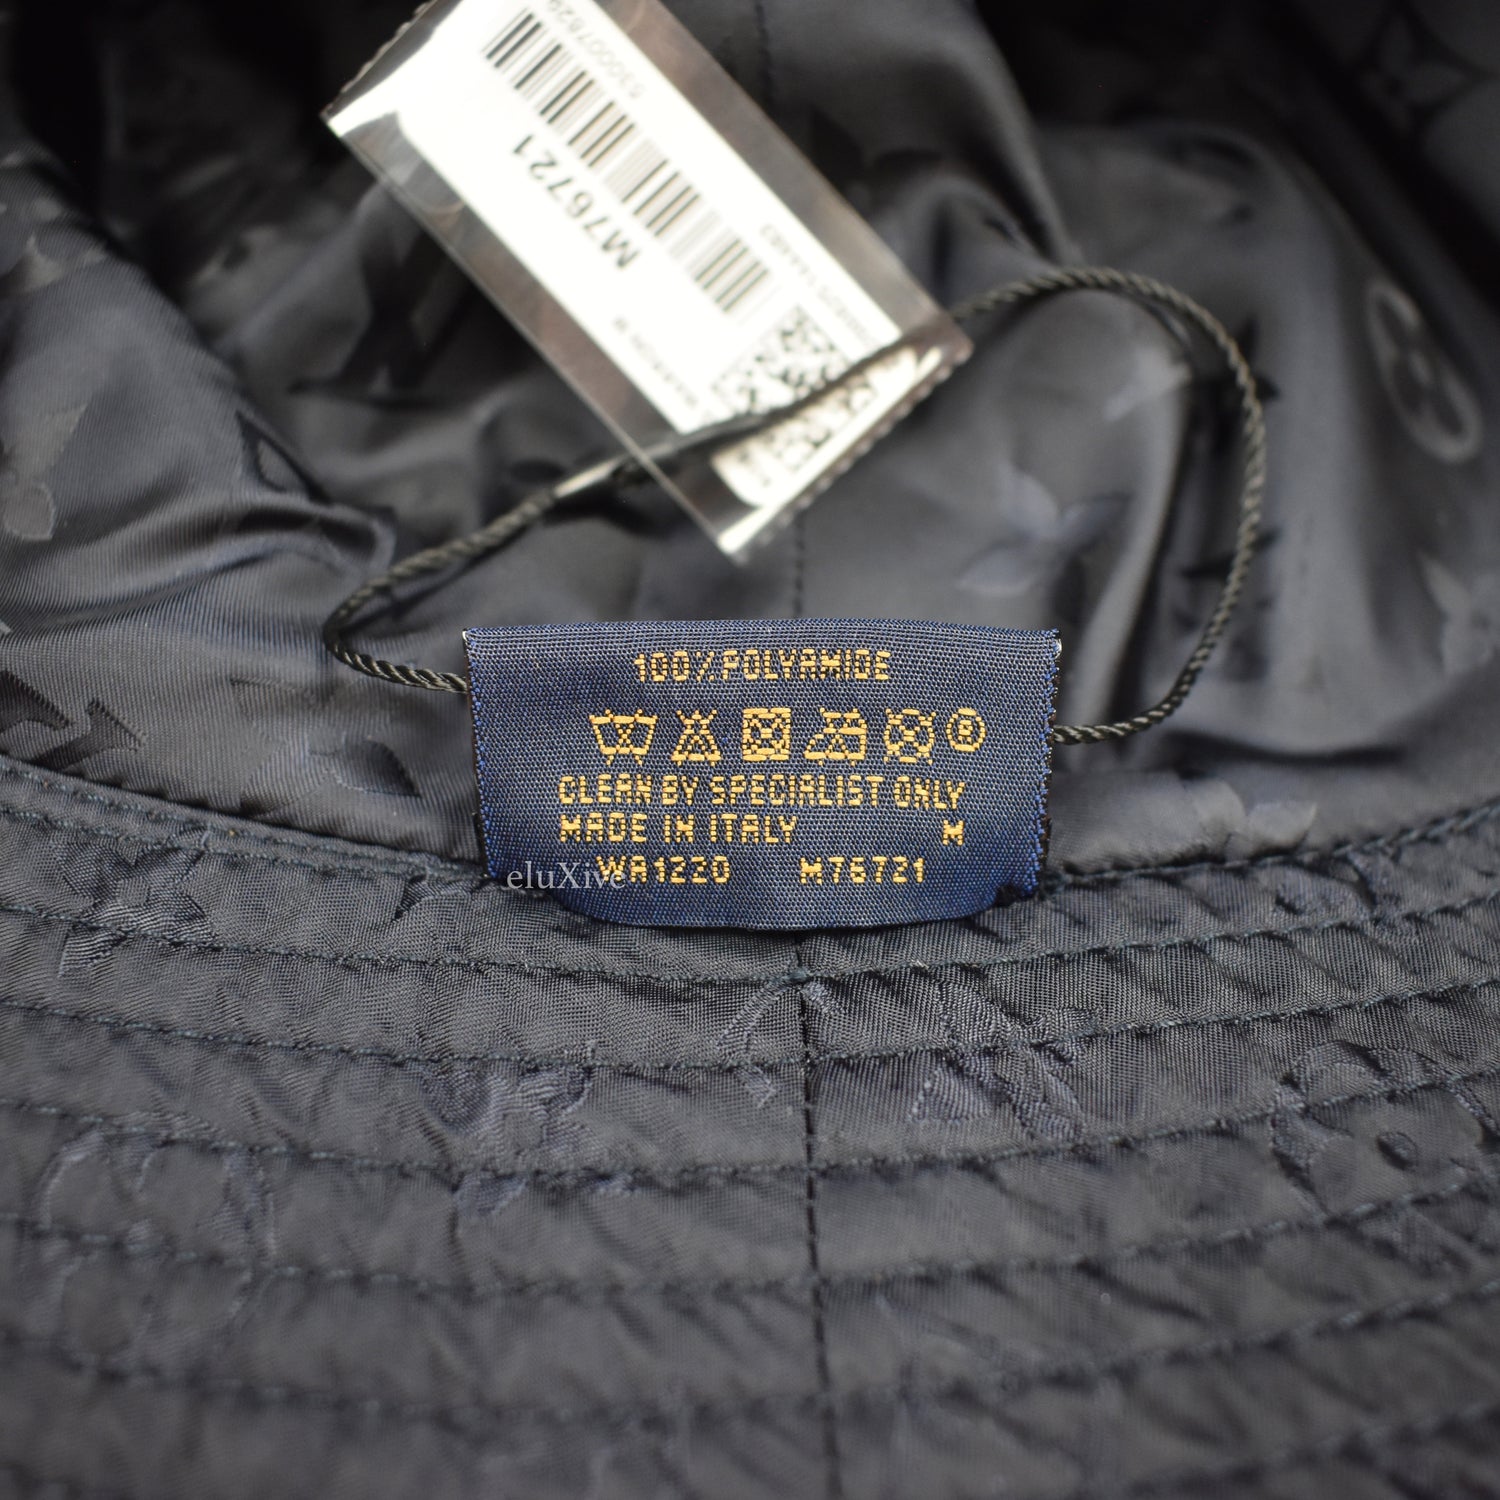 Louis Vuitton Brown Monogram Leather Bucket Hat - HypedEffect